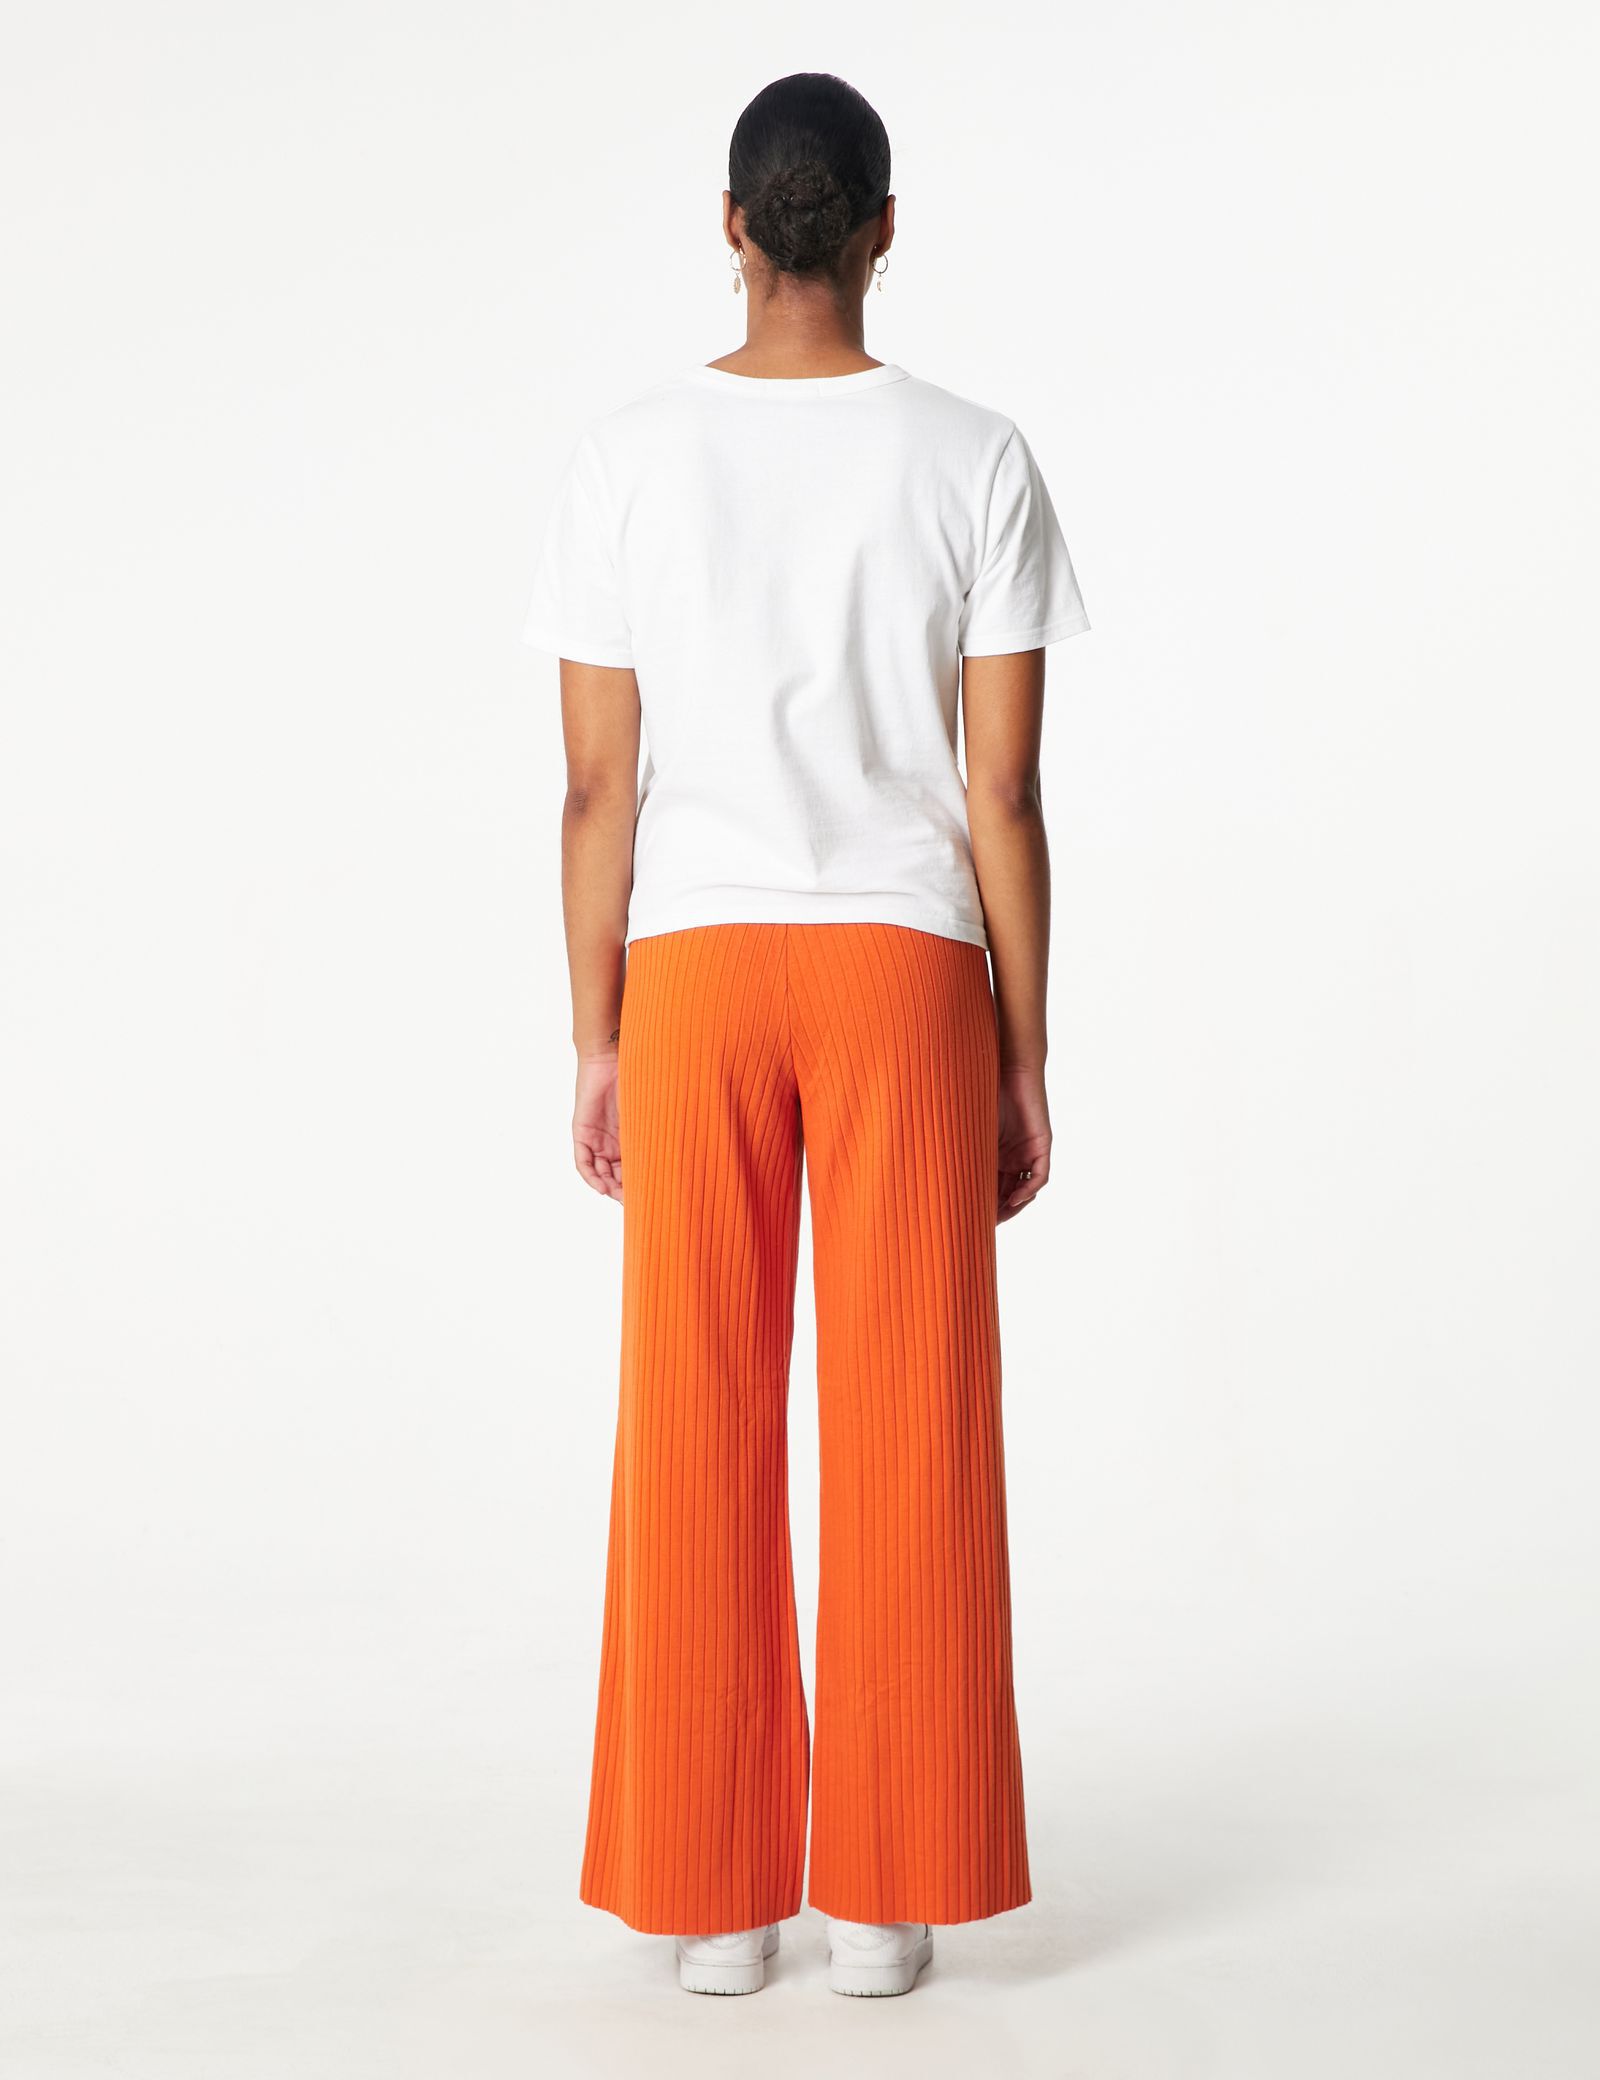 Mode Pantalons Pantalons taille haute Birgitte Herskind Pantalon taille haute orange clair style d\u00e9contract\u00e9 